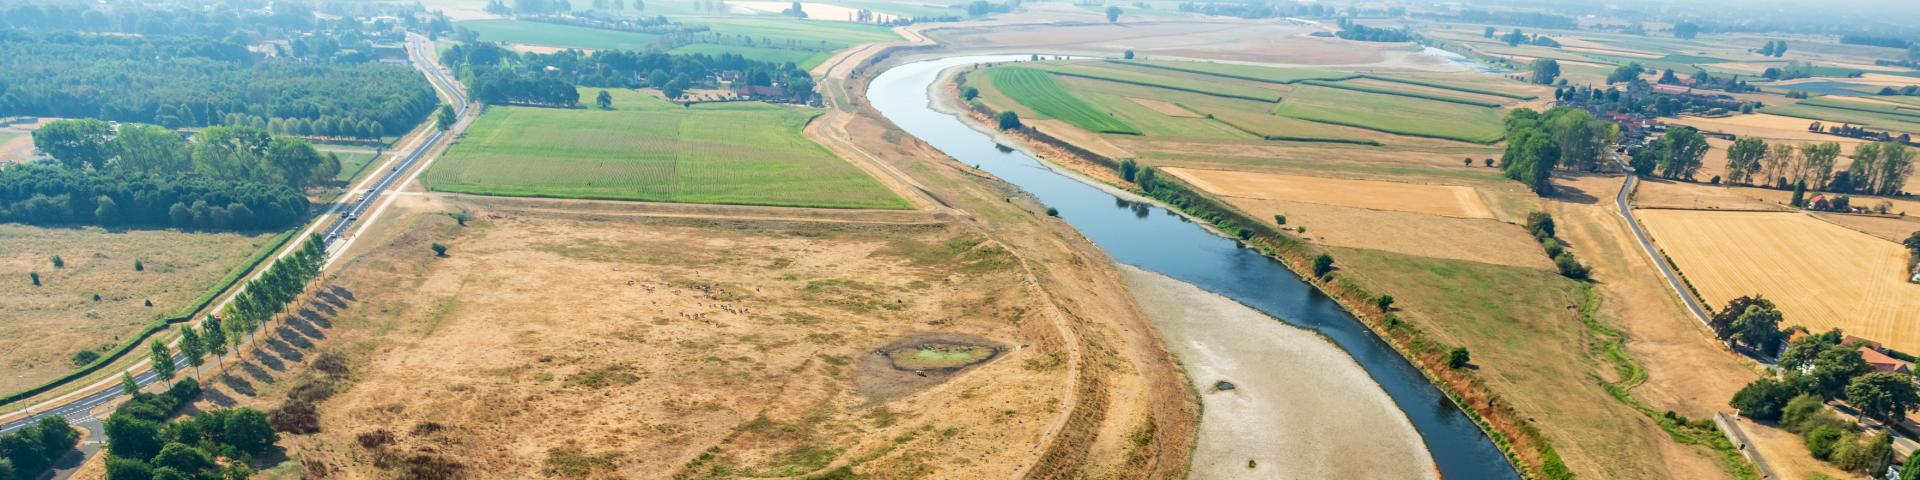 Luchtfoto van rivier met lage waterstand en droog land langs de oevers